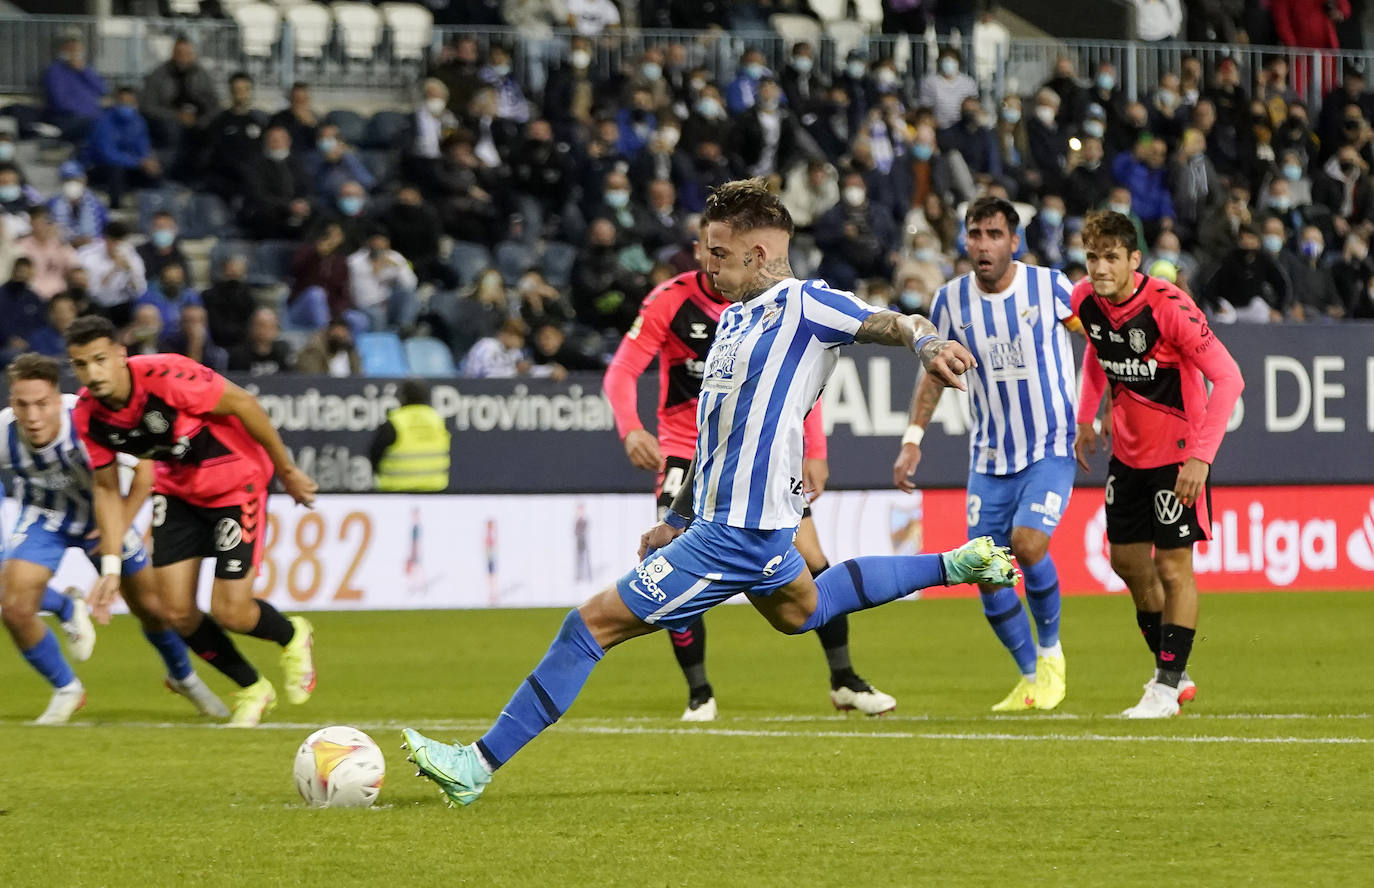 Malaga CF beat Tenerife 1-0 at La Rosaleda on Monday night.